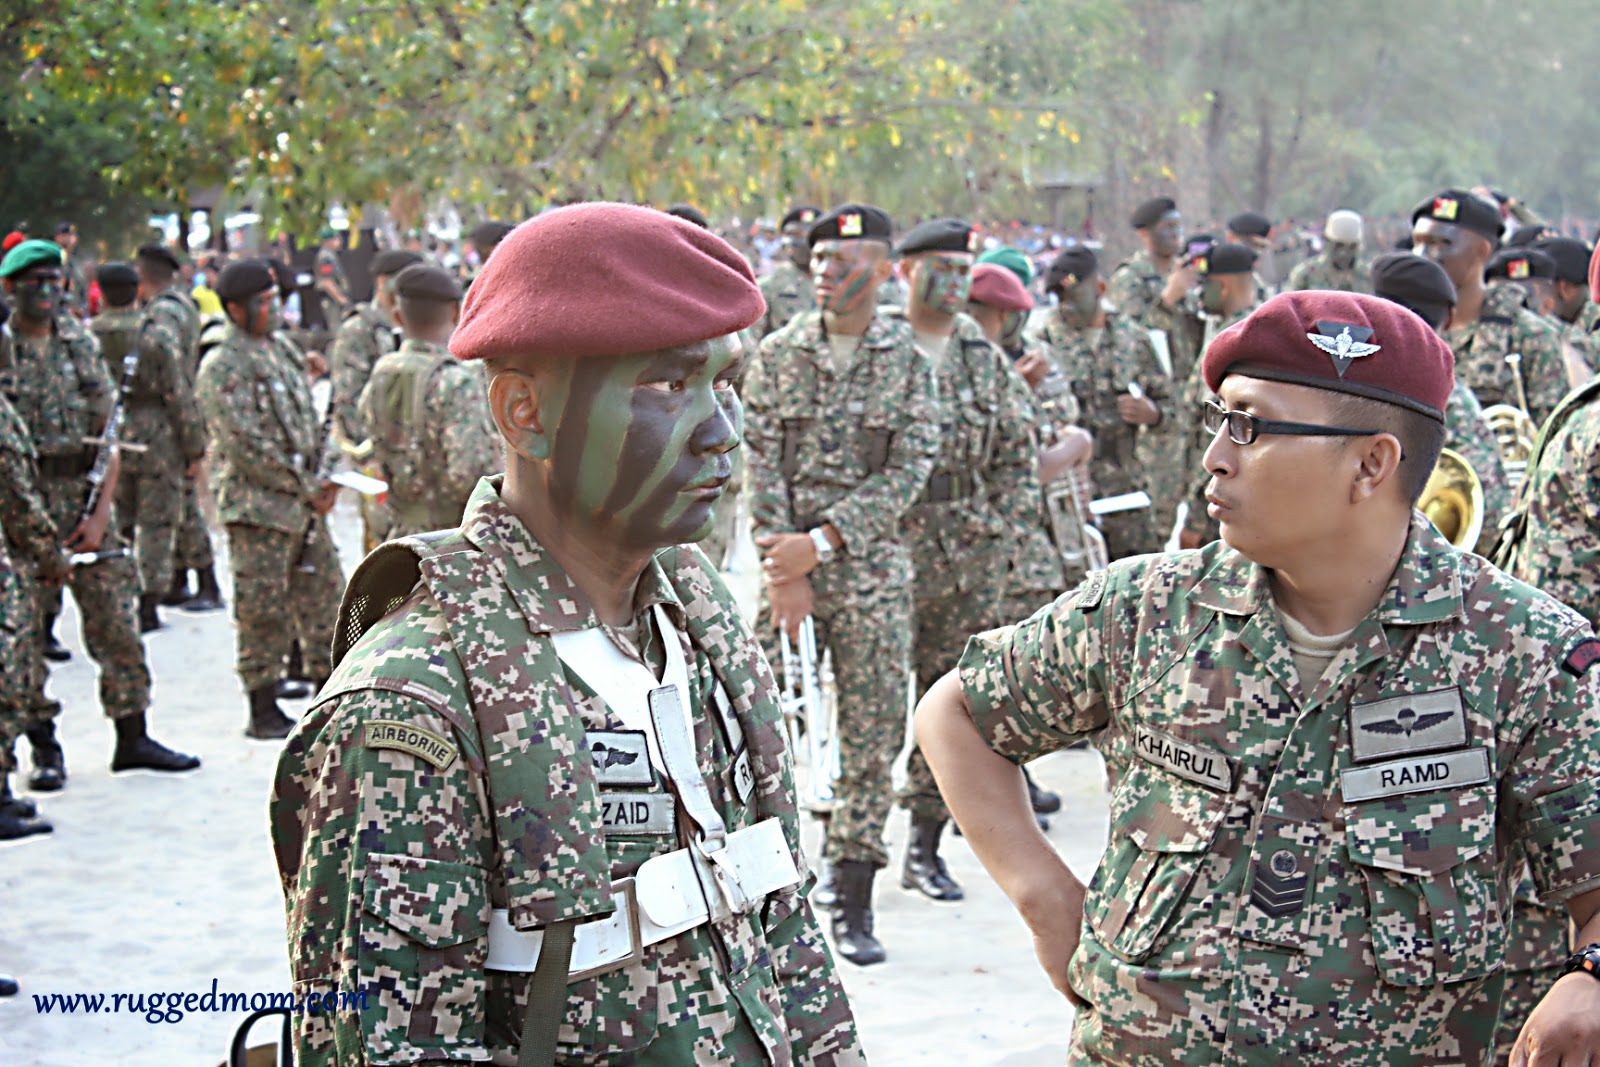 Sambutan Hari Tentera Darat 82 Port Dickson Ruggedmom Uniform Celoreng